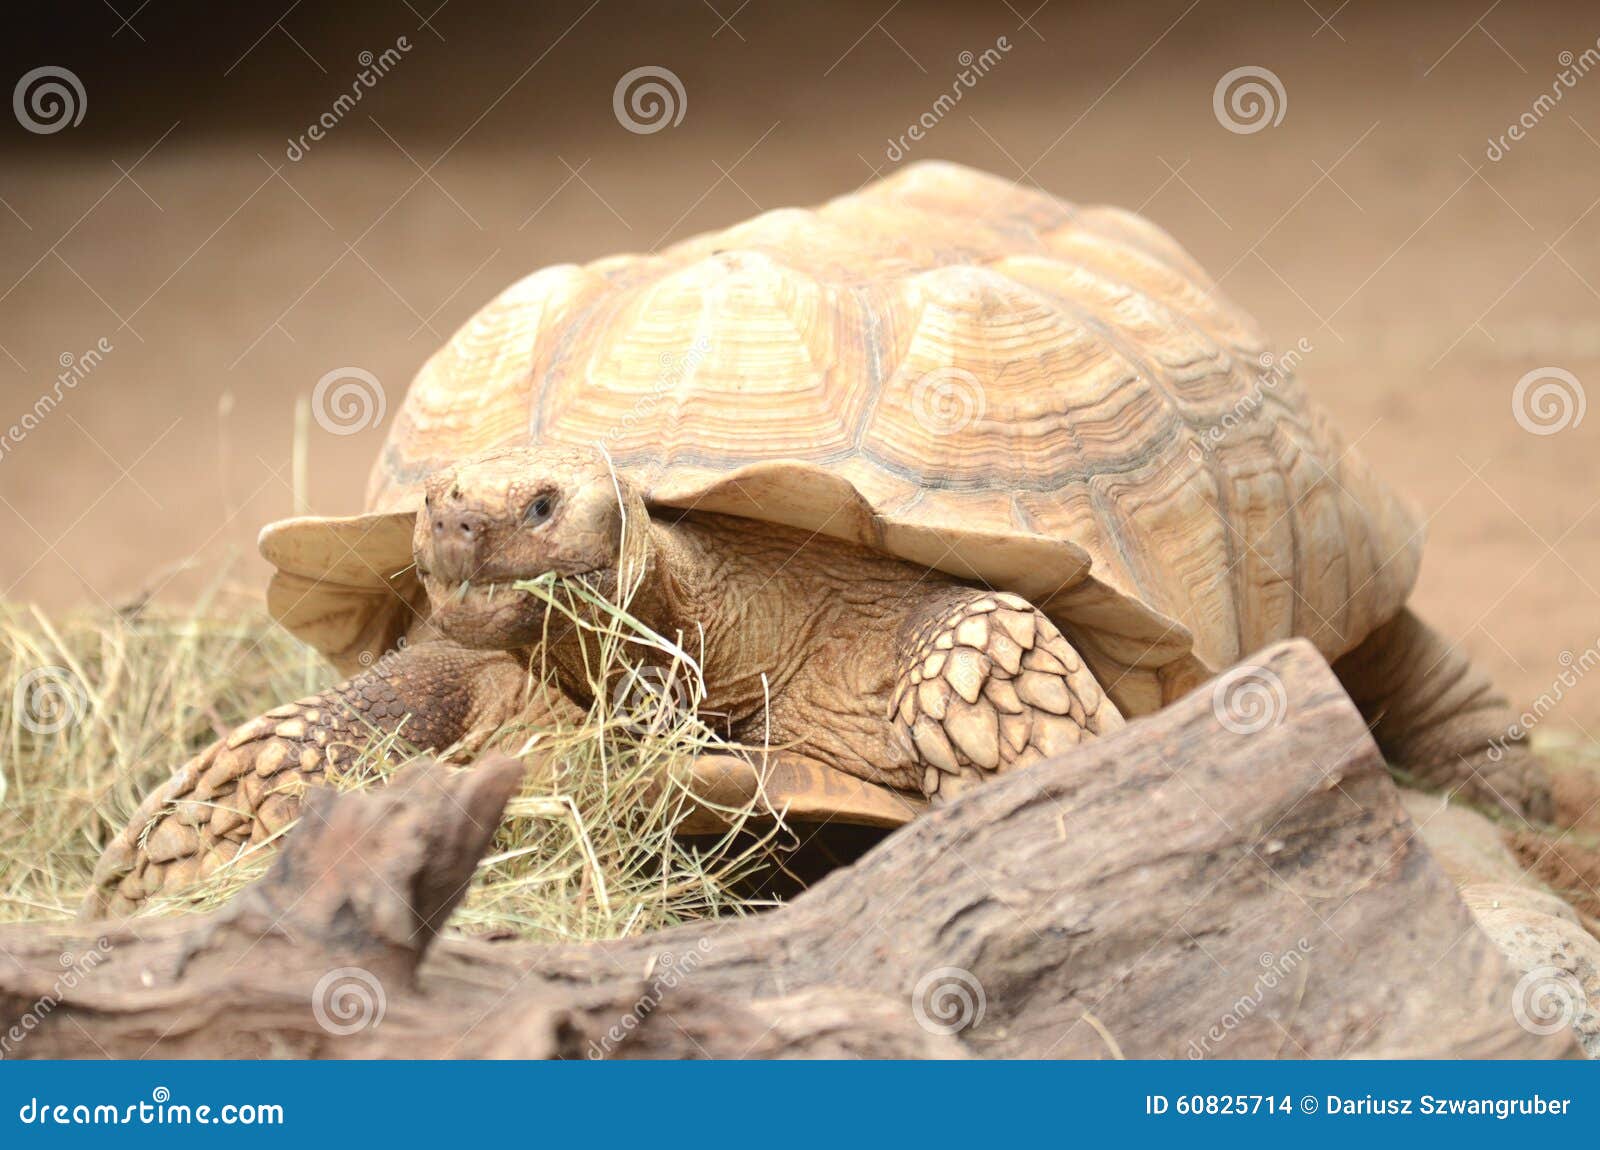 turtle in loro park in puerto de la cruz on tenerife, canary islands